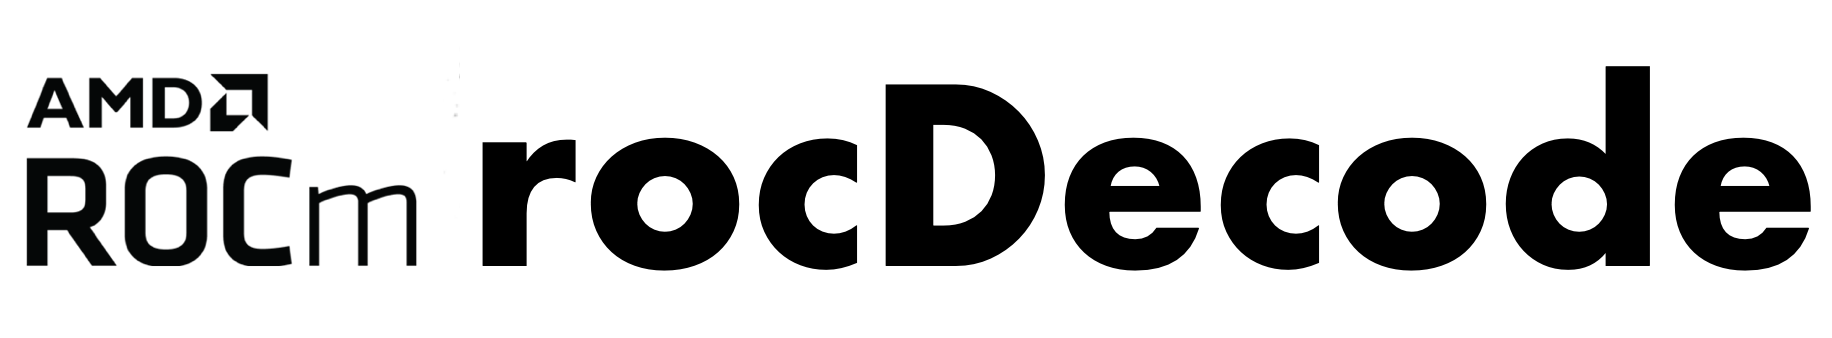 AMD_rocDecode_Logo.png